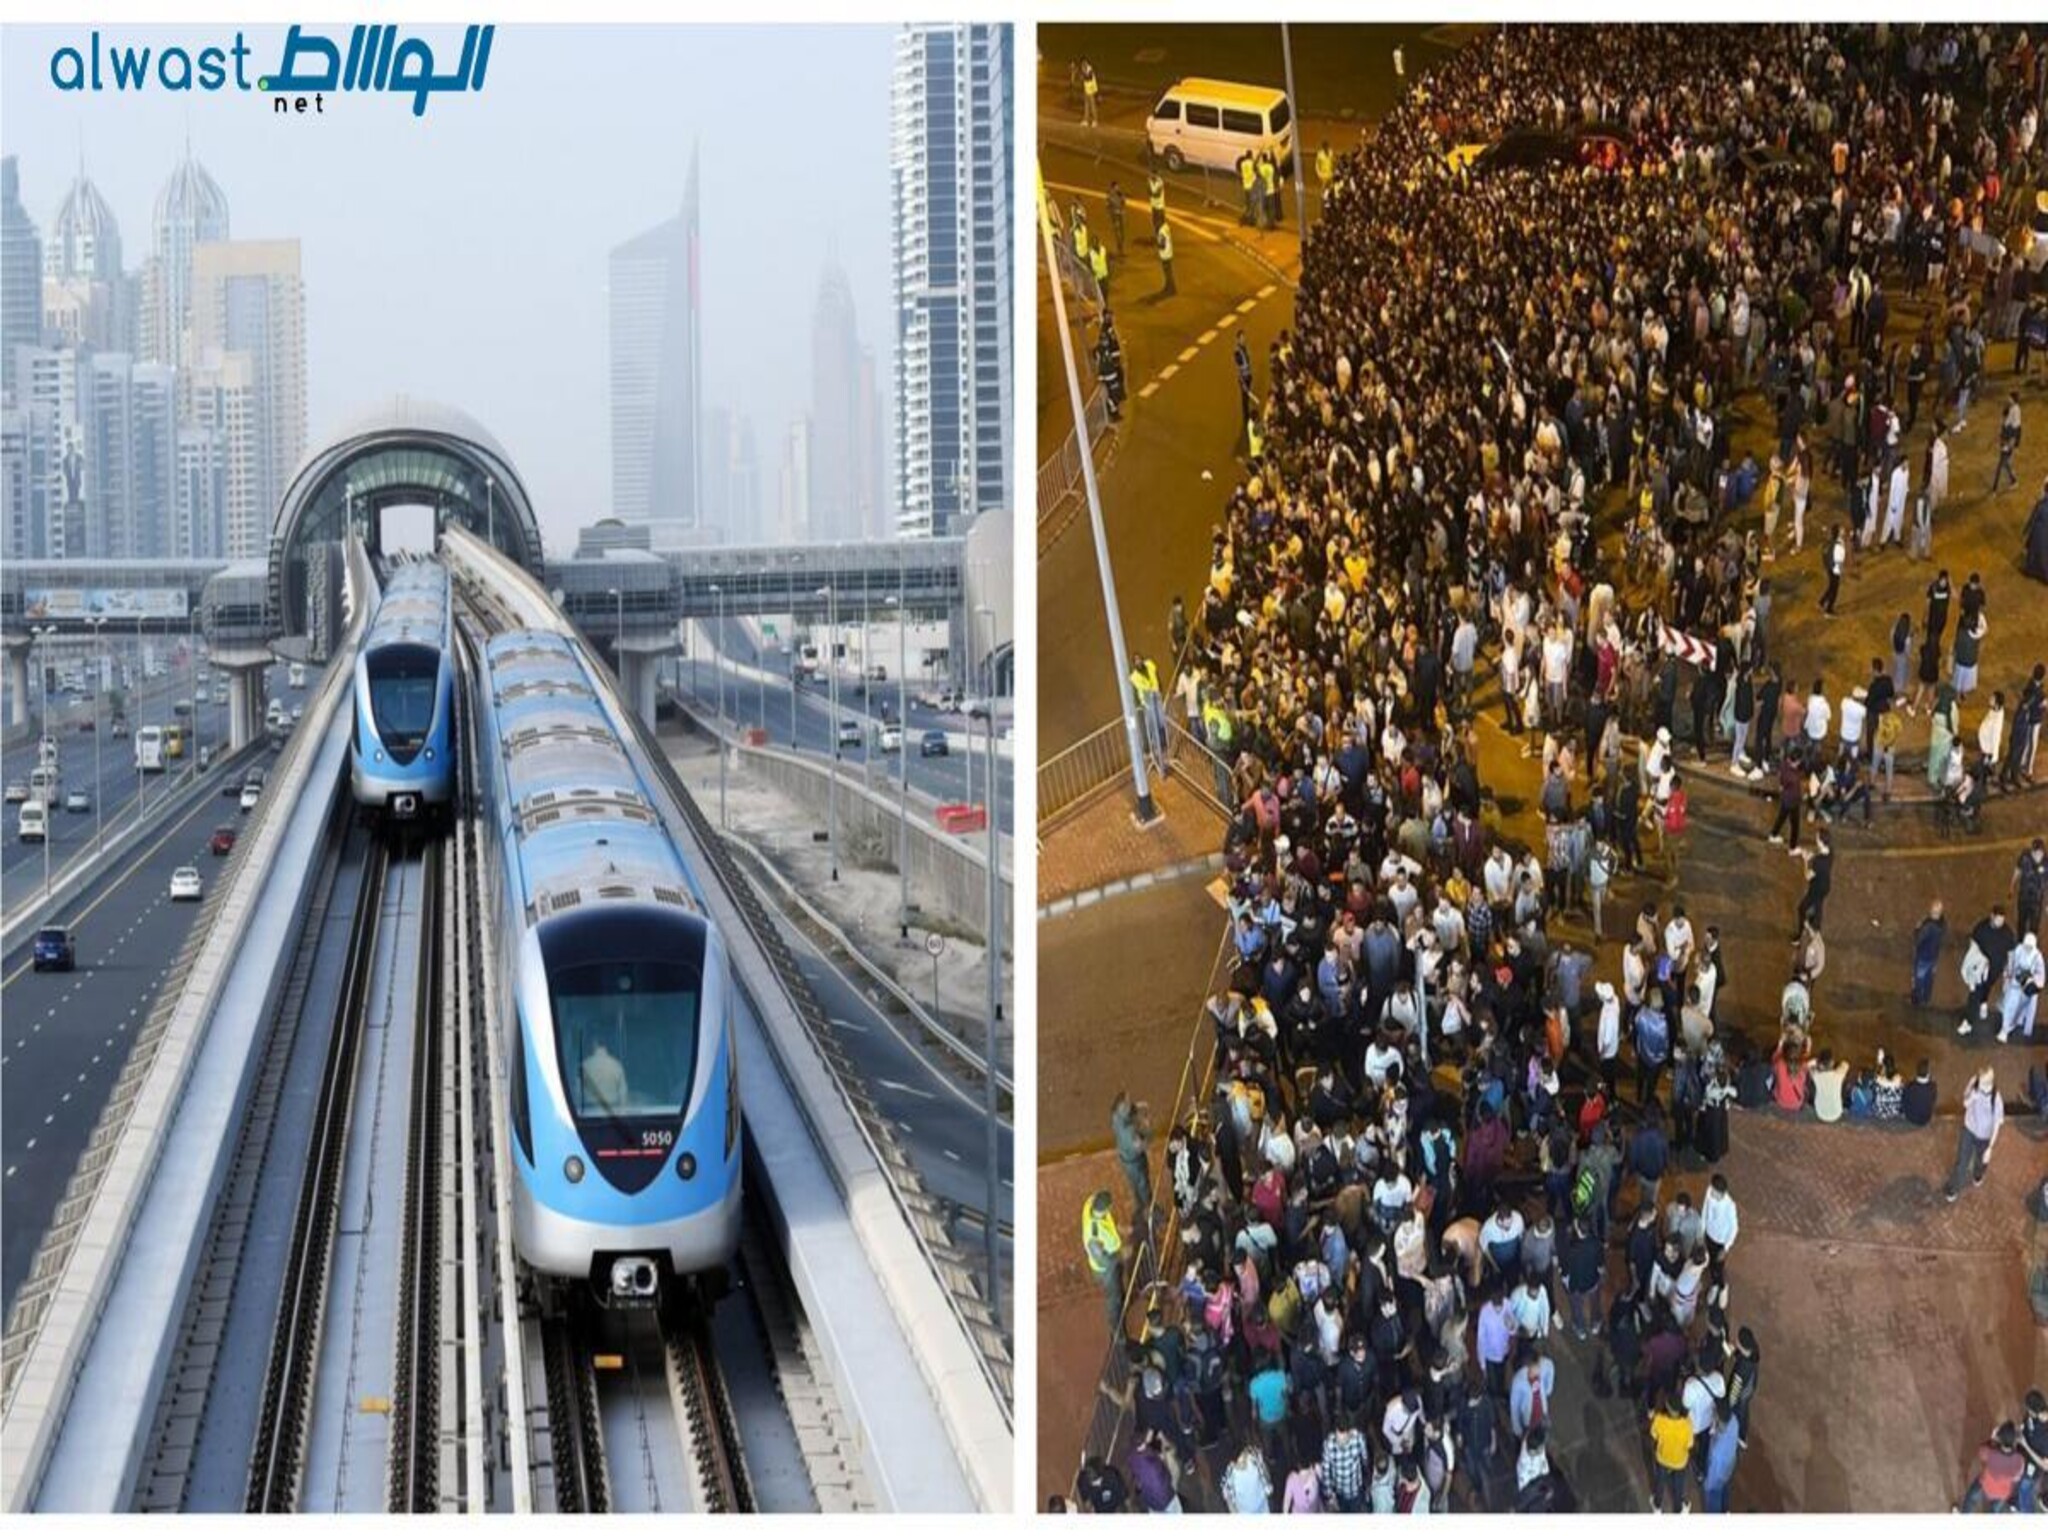 Dubai Public Transport Records Over 2 Million Passengers on NYE